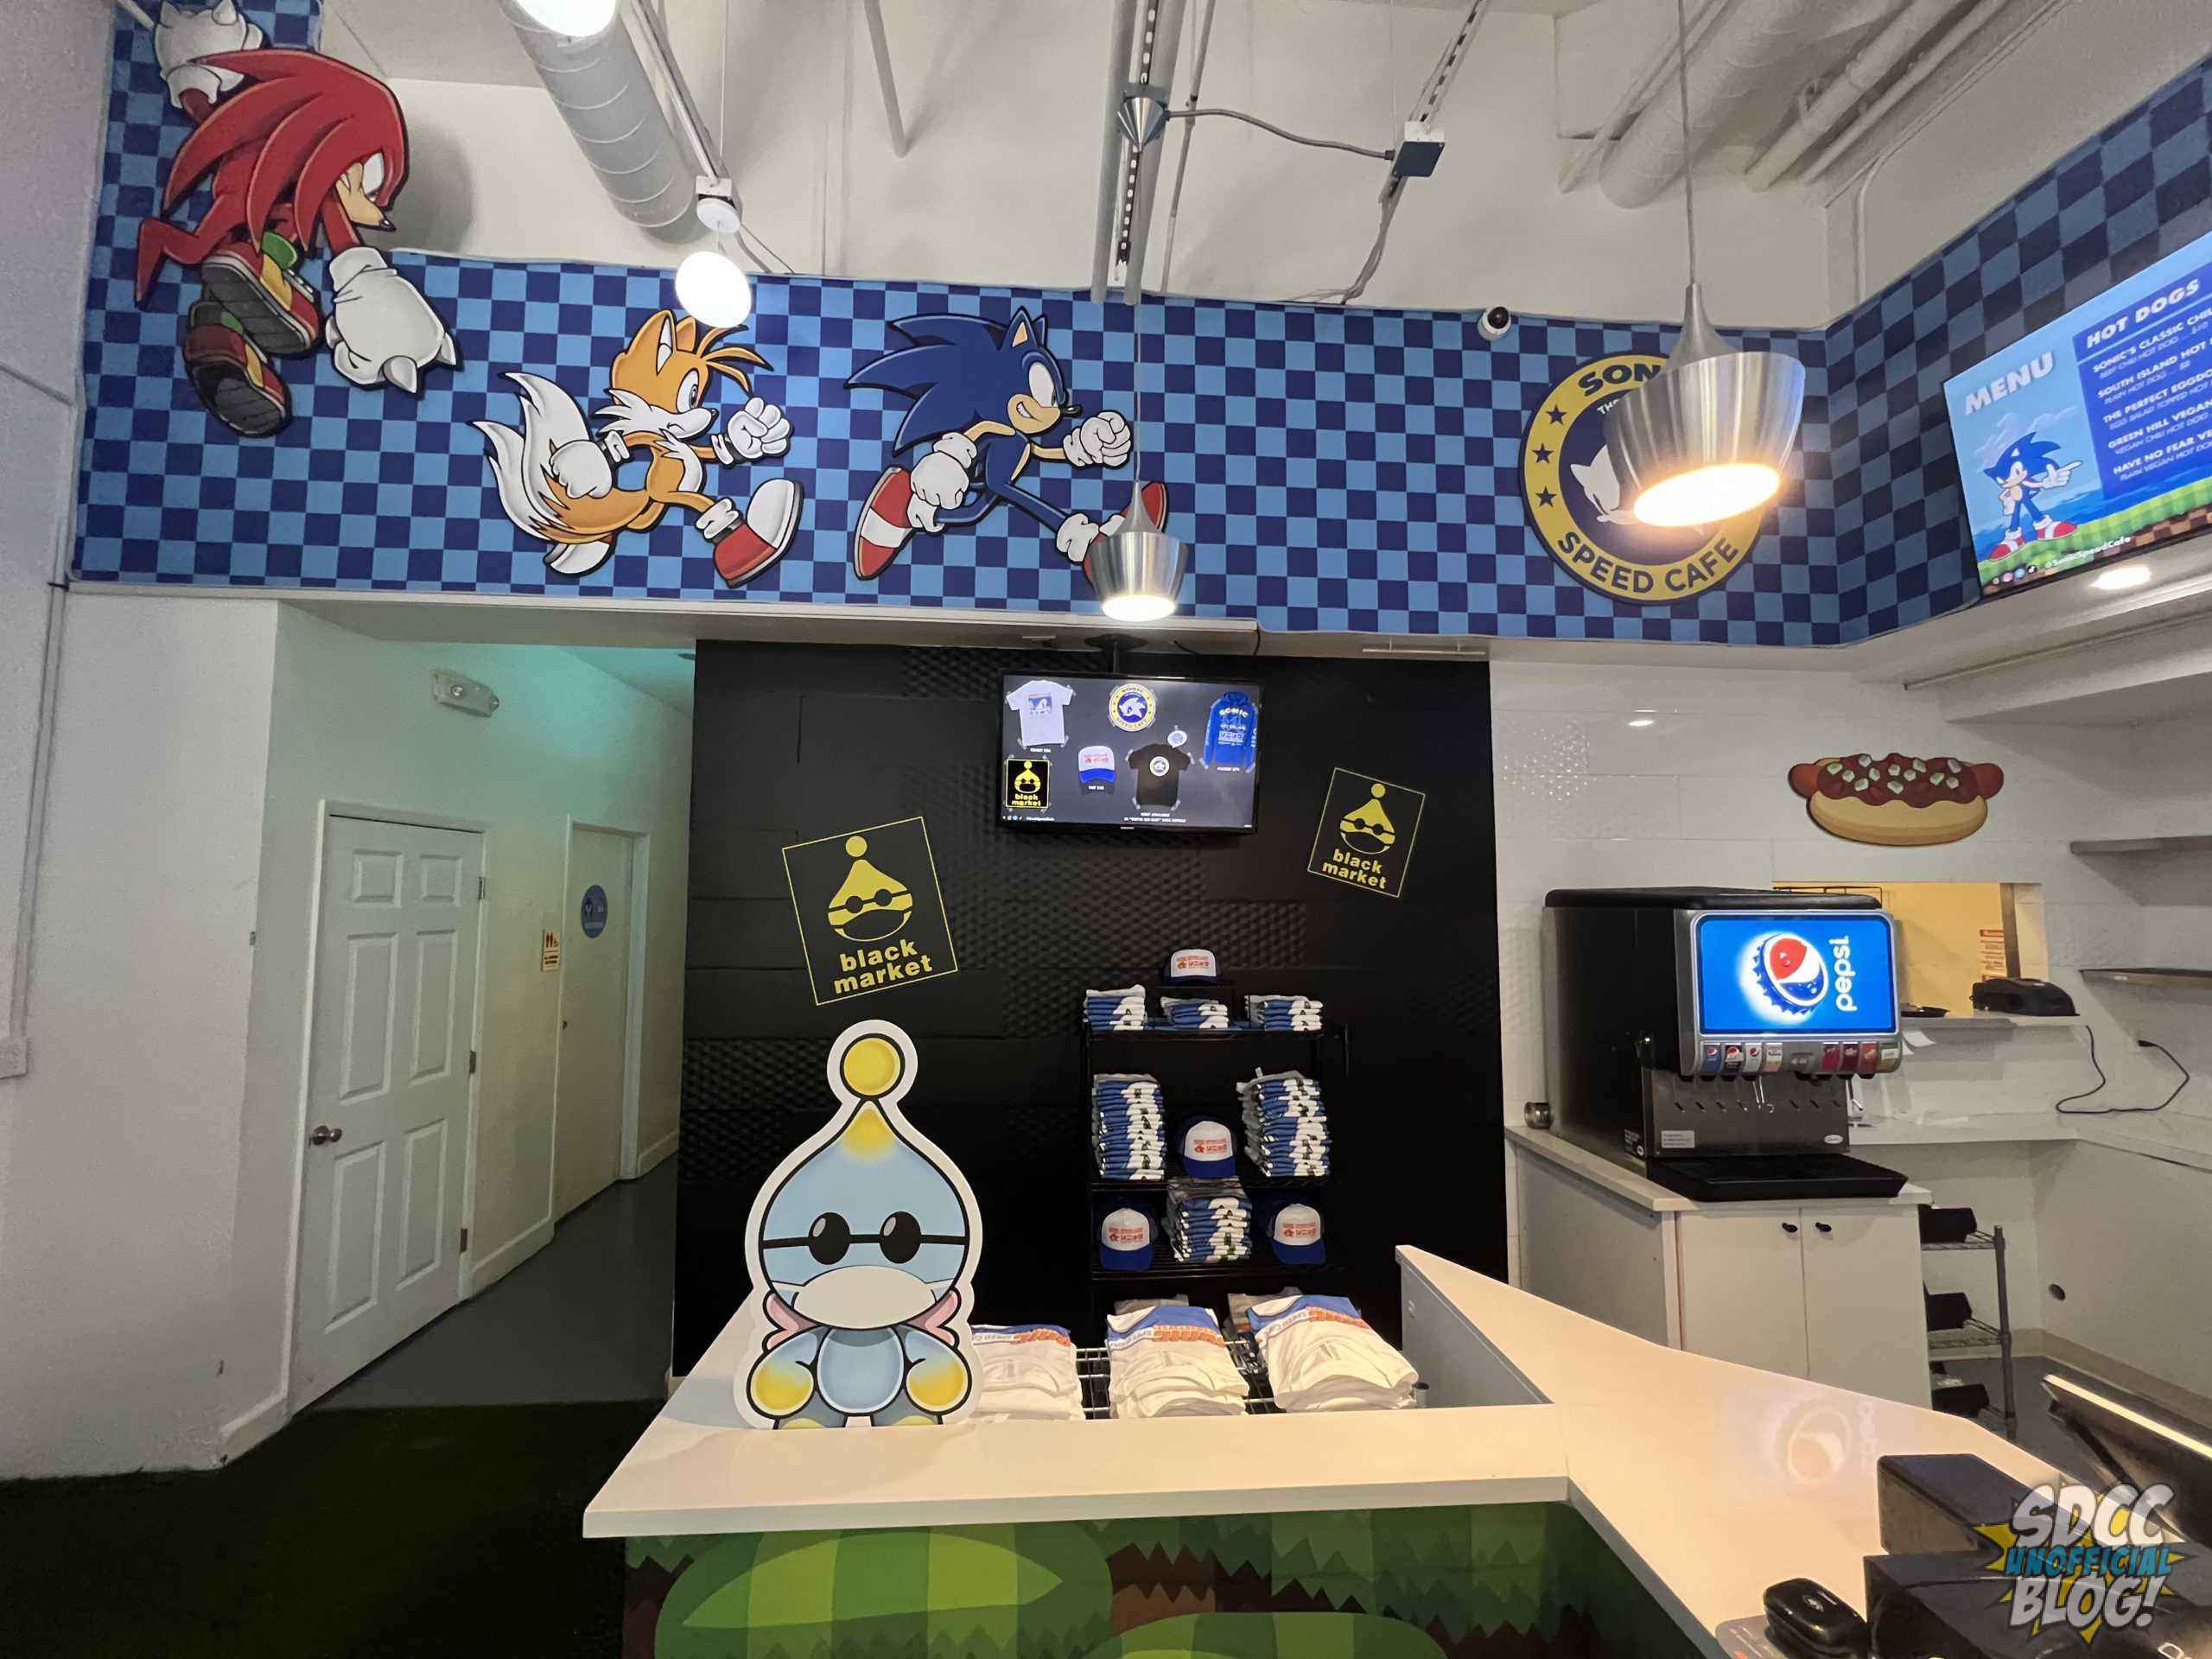 SanDiegoVille: Sonic The Hedgehog Pop-Up Restaurant Opens For